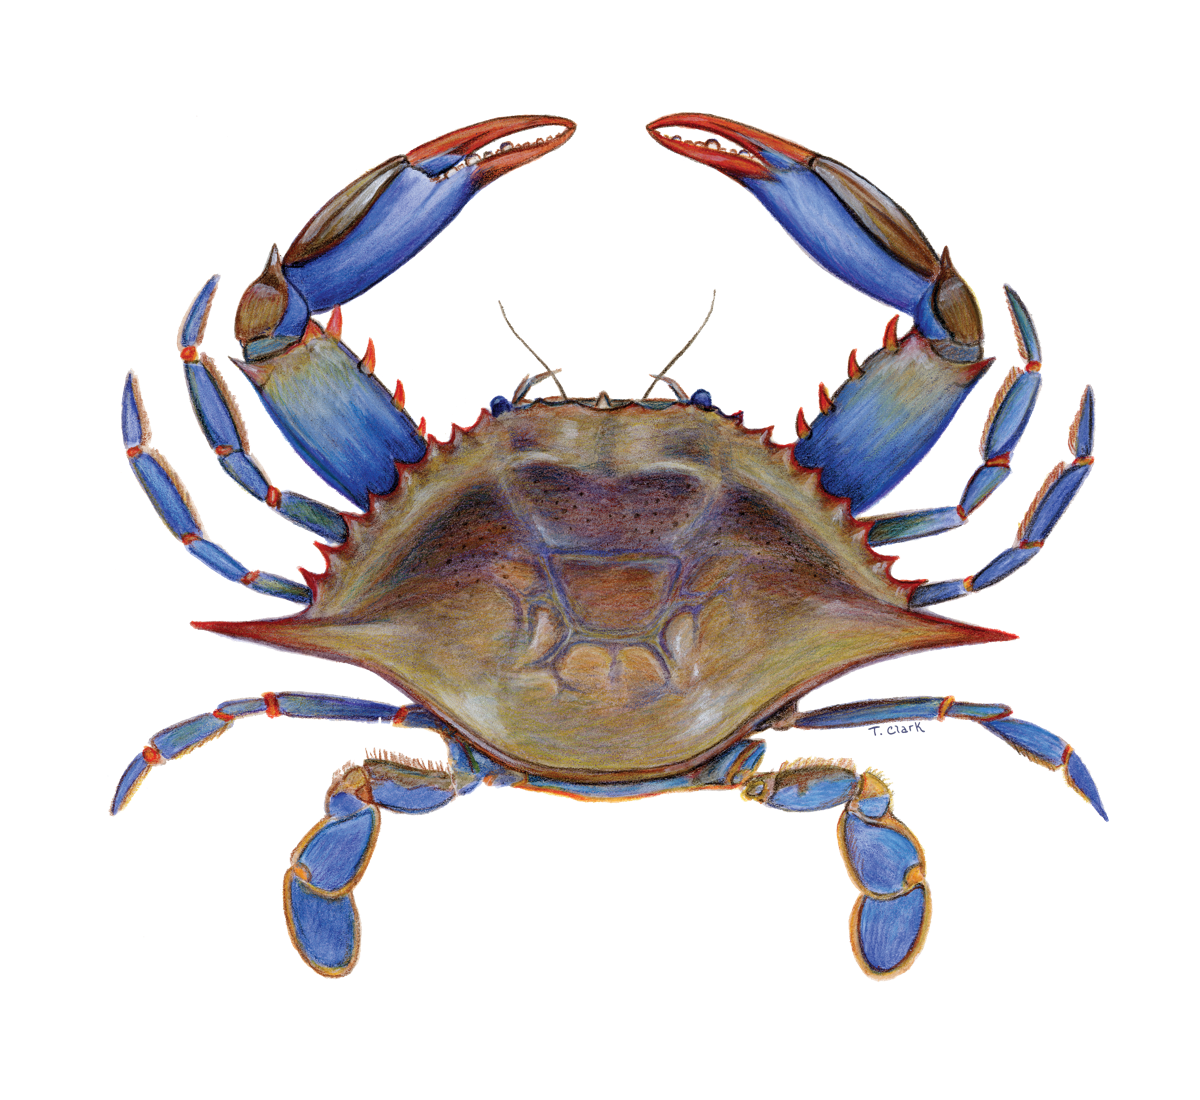 Blue Crab by Gavin Erwin - Leeward Look